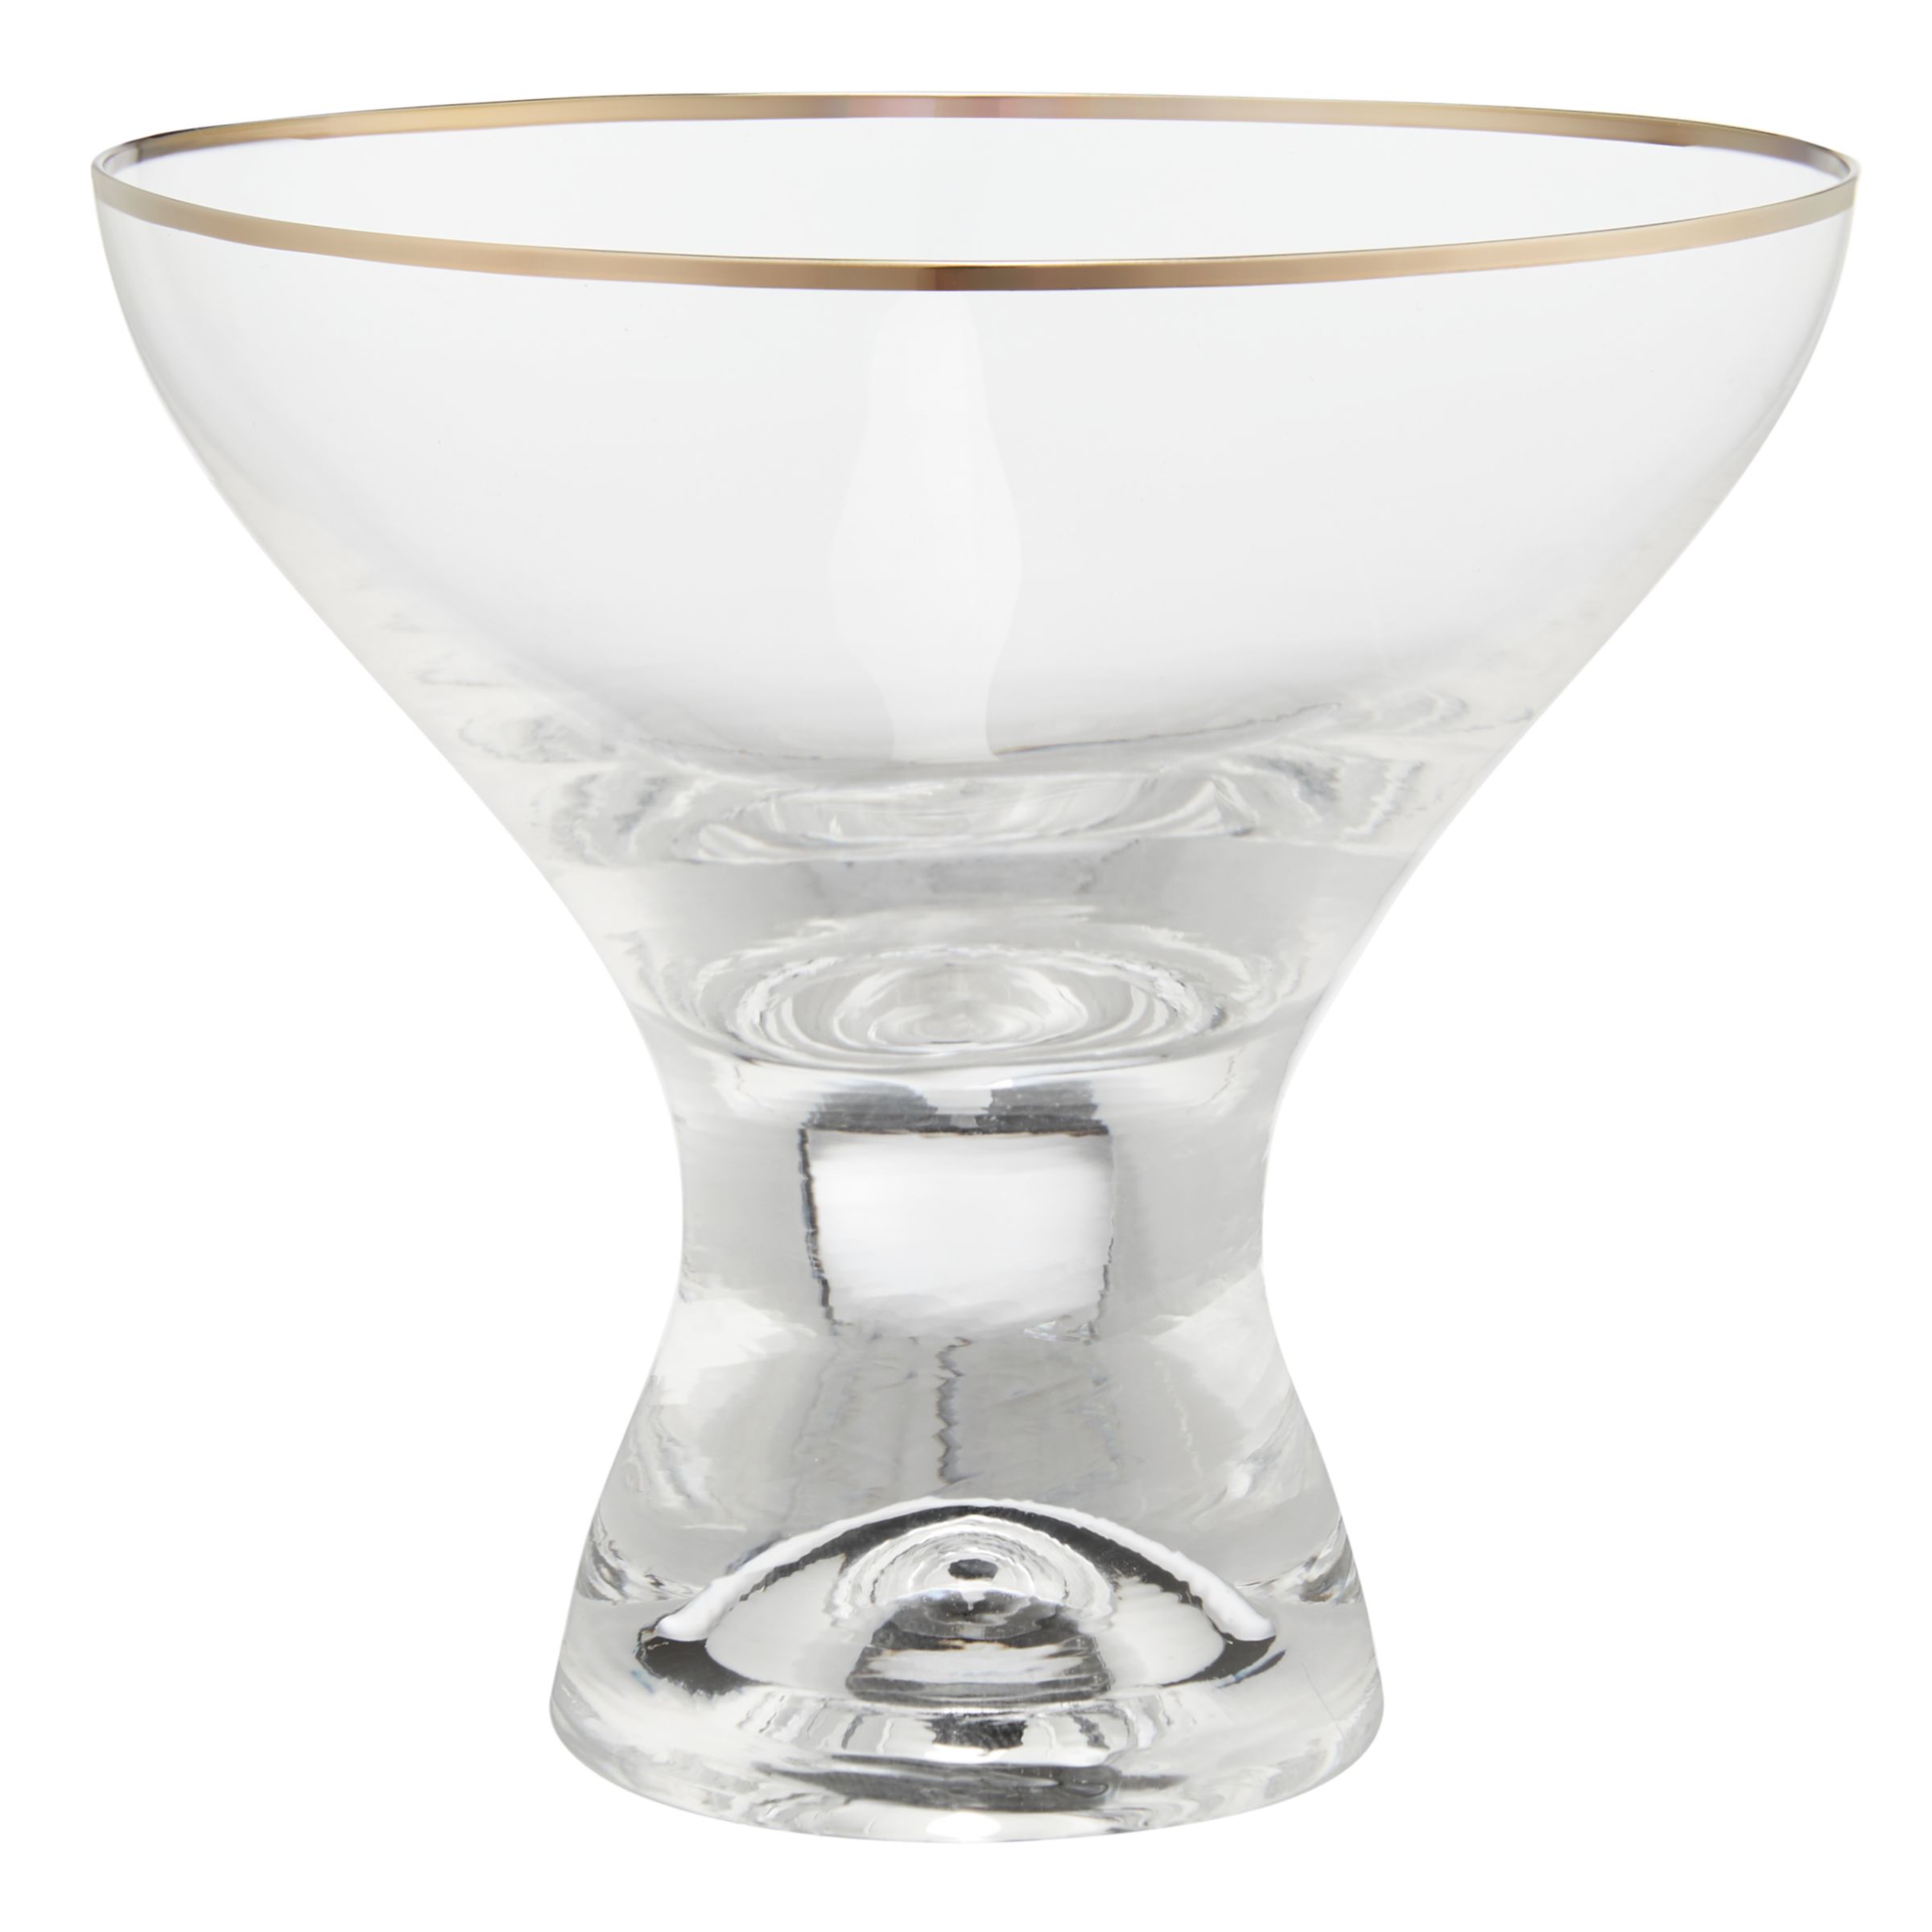 John Lewis & Partners Moonstone Glass Bowl, 11.8cm